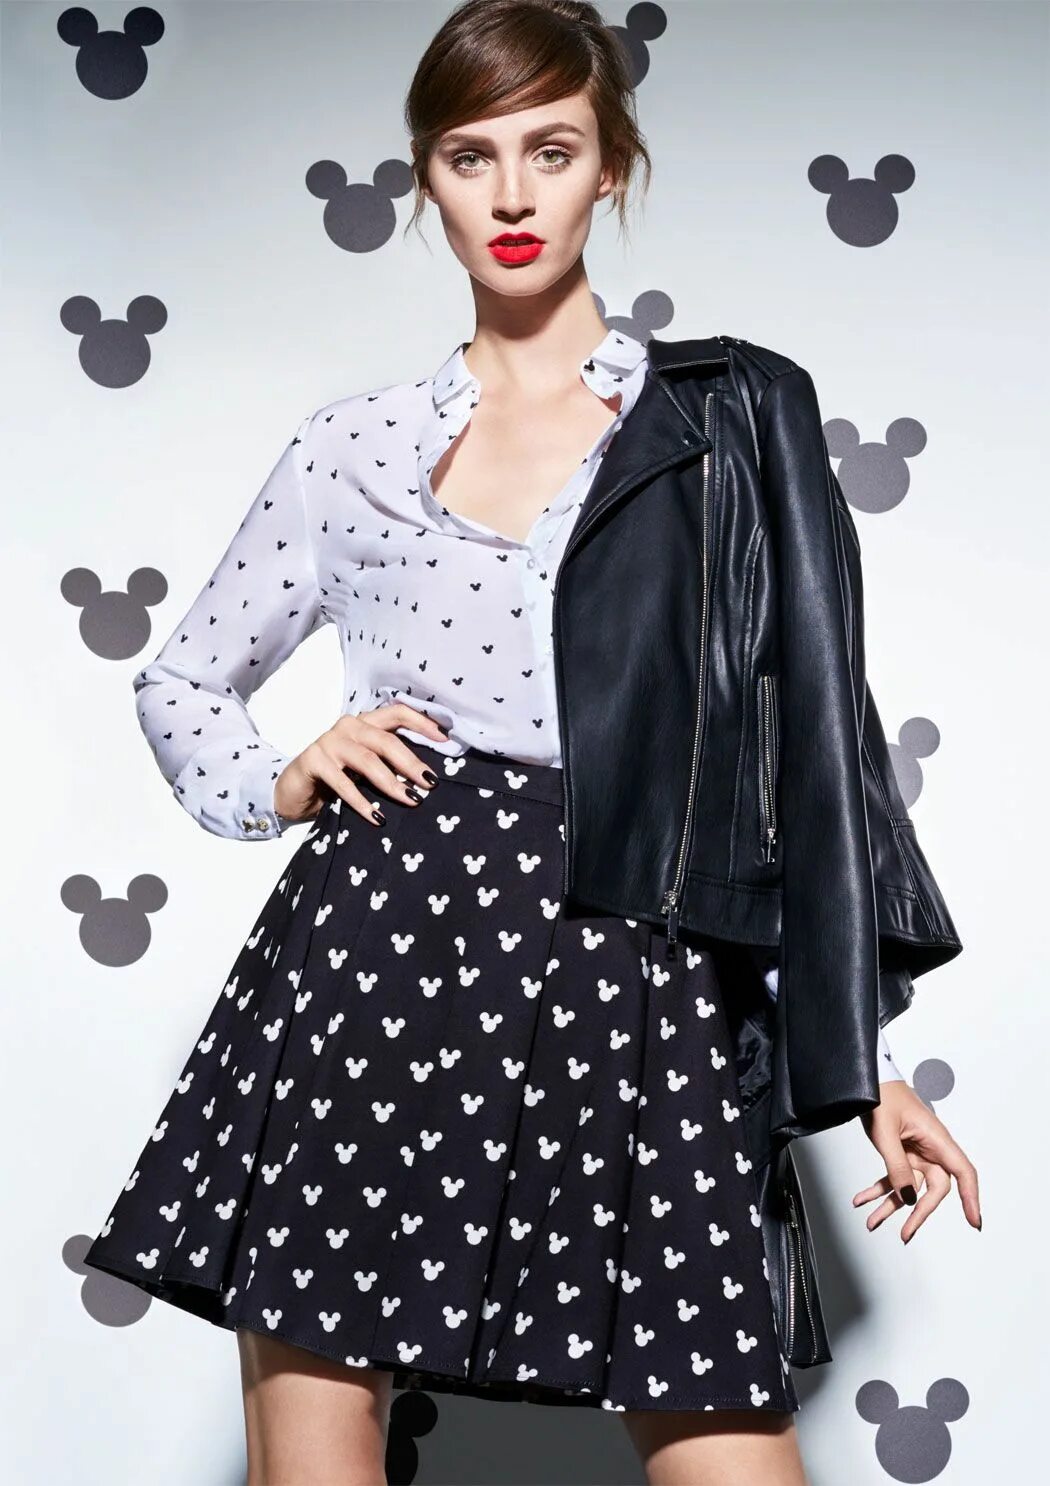 Mohito accessories. Mickey Mouse Mohito юбка. Mohito одежда осень. Mohito одежда юбка. Mohito одежда интернет.